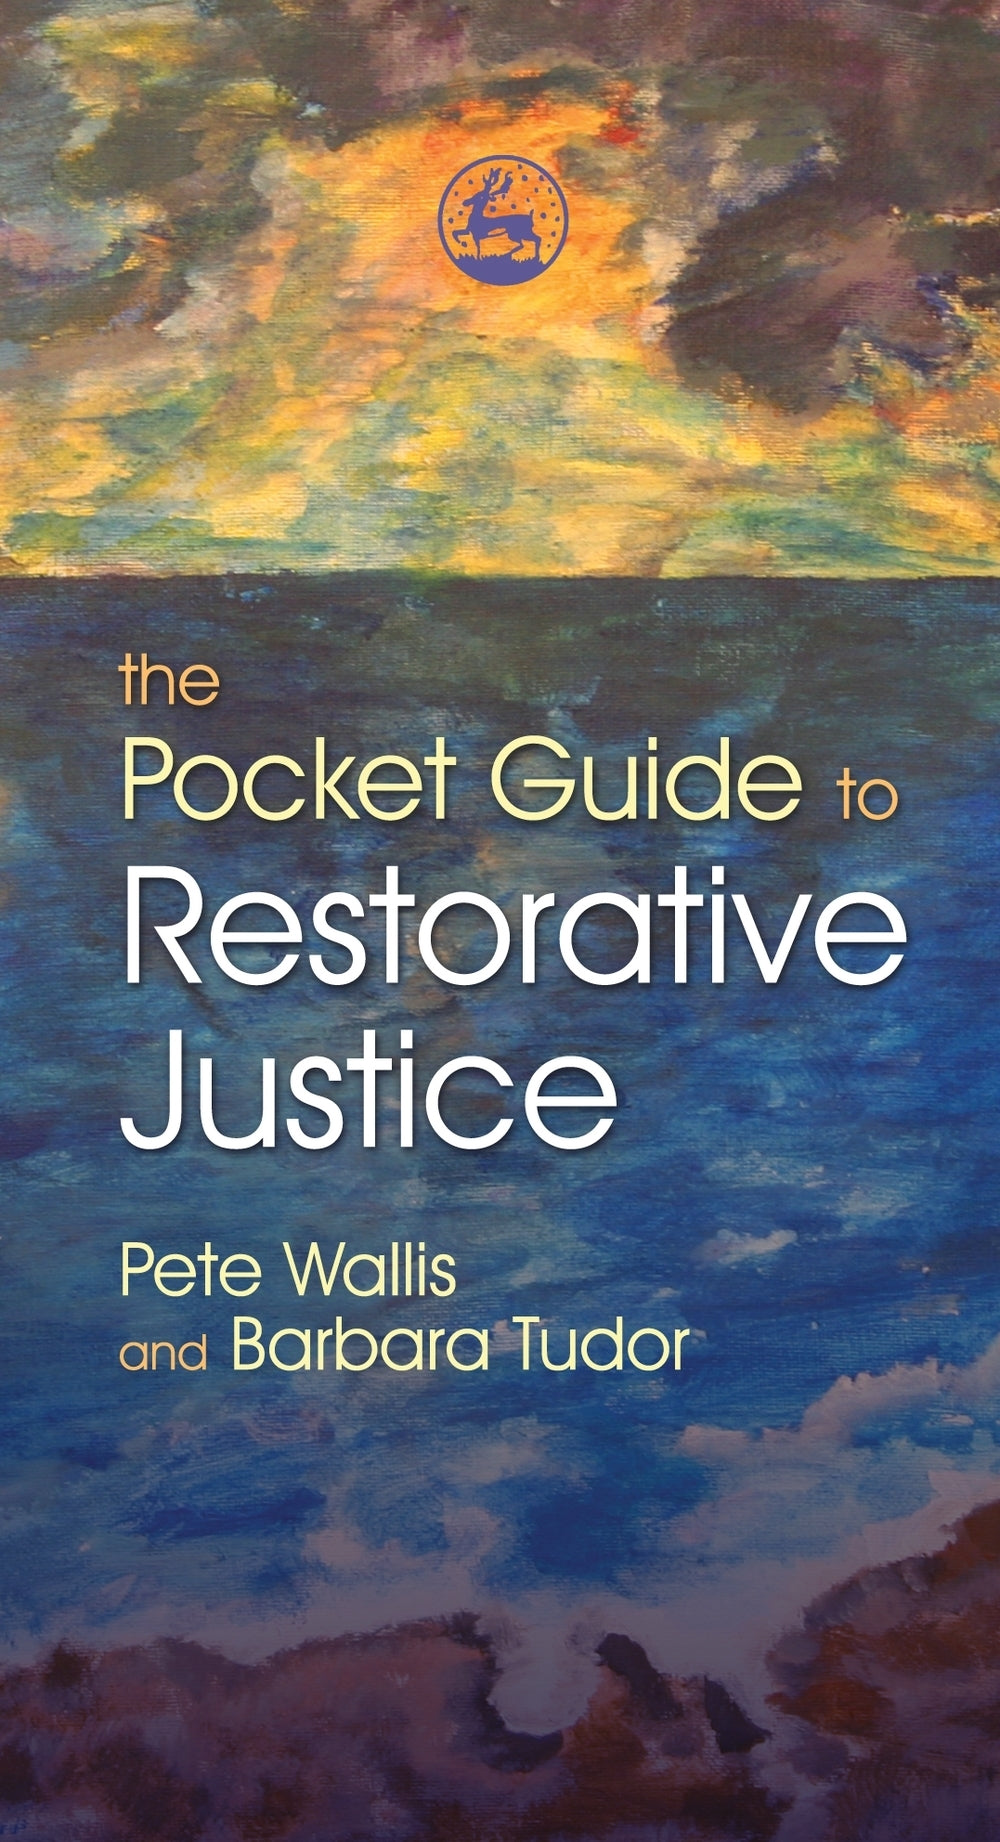 The Pocket Guide to Restorative Justice by Pete Wallis, Barbara Tudor, Chris Slane, Pete & Thalia Wallis